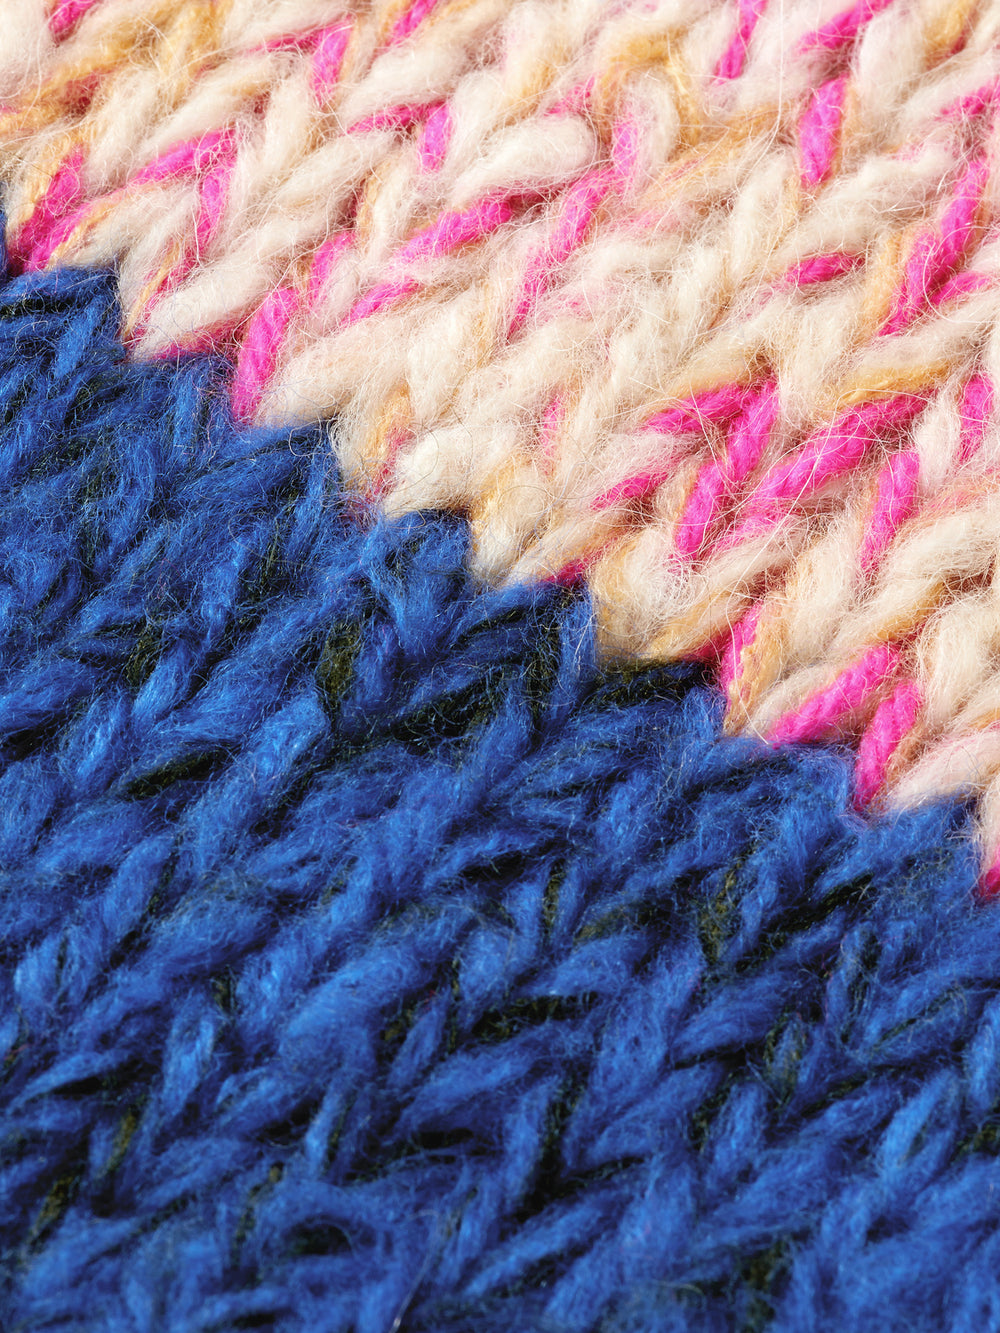 Hand knit colourblock scarf - Scotch & Soda NZ